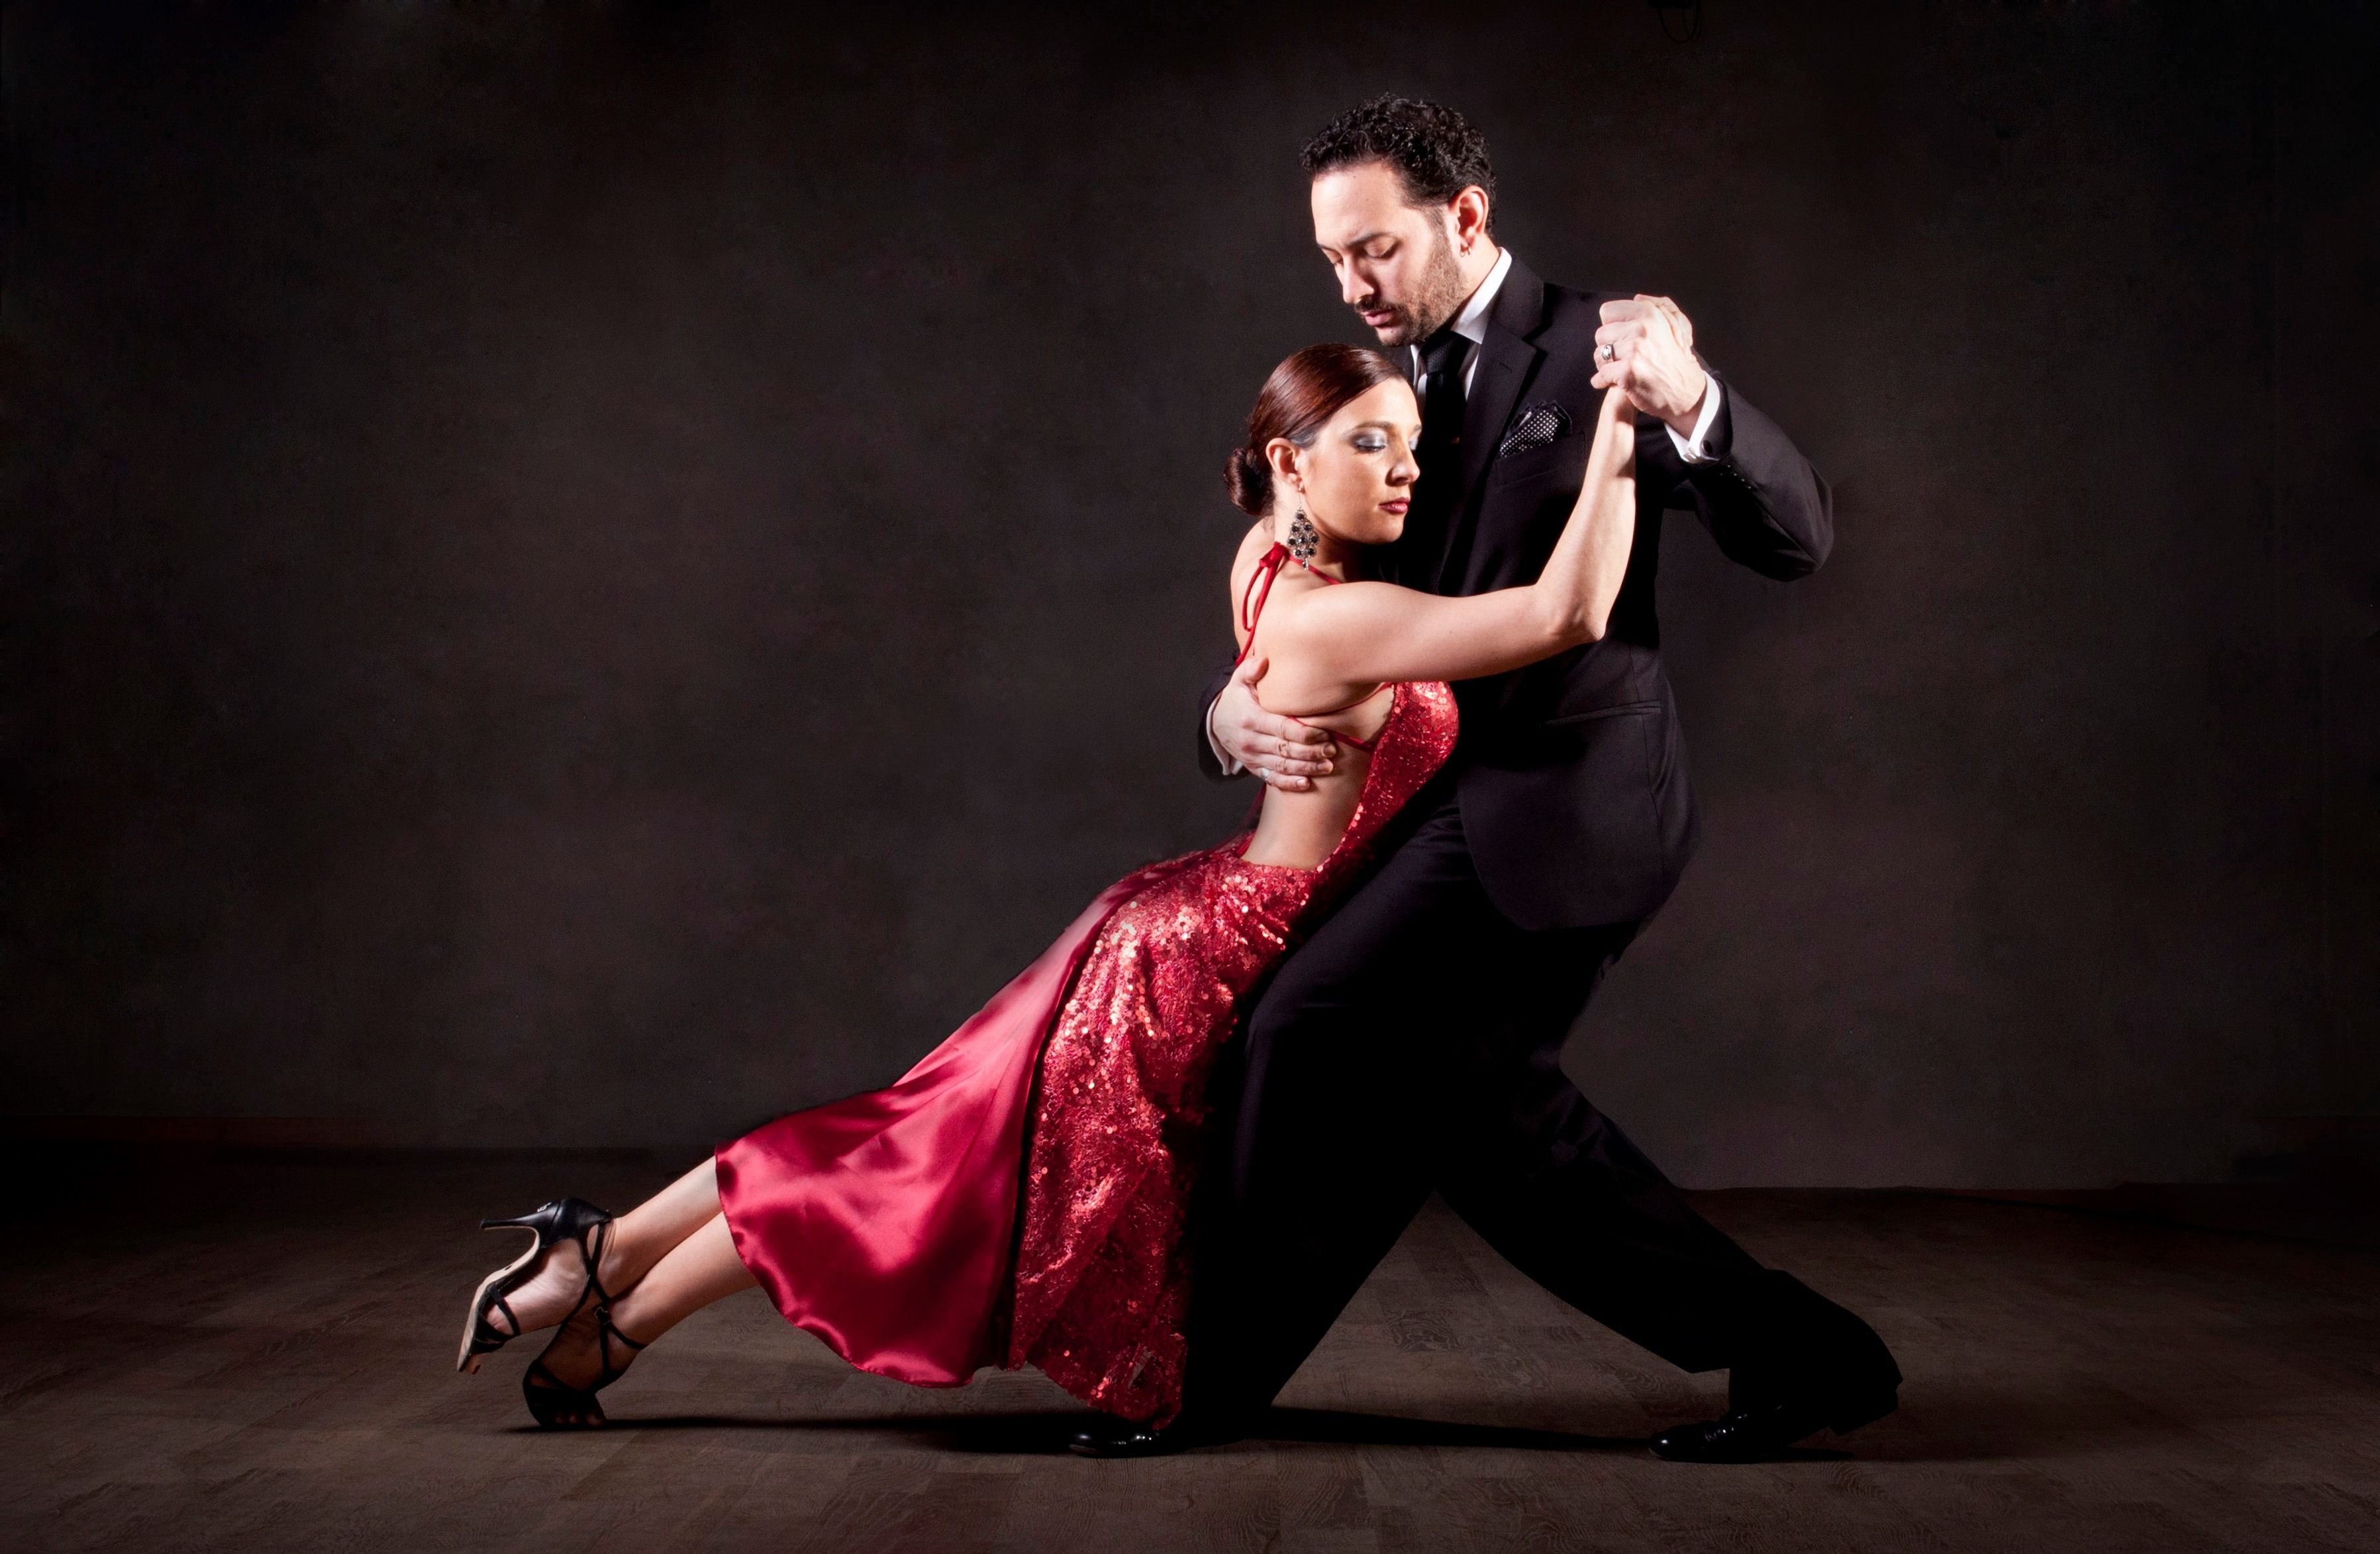 Voxeldance tango. Аргентинский танцор танго Карлос Гарида. Аргентинское танго милонга. Танго Карлос Саура. Фотосессия в стиле танго.